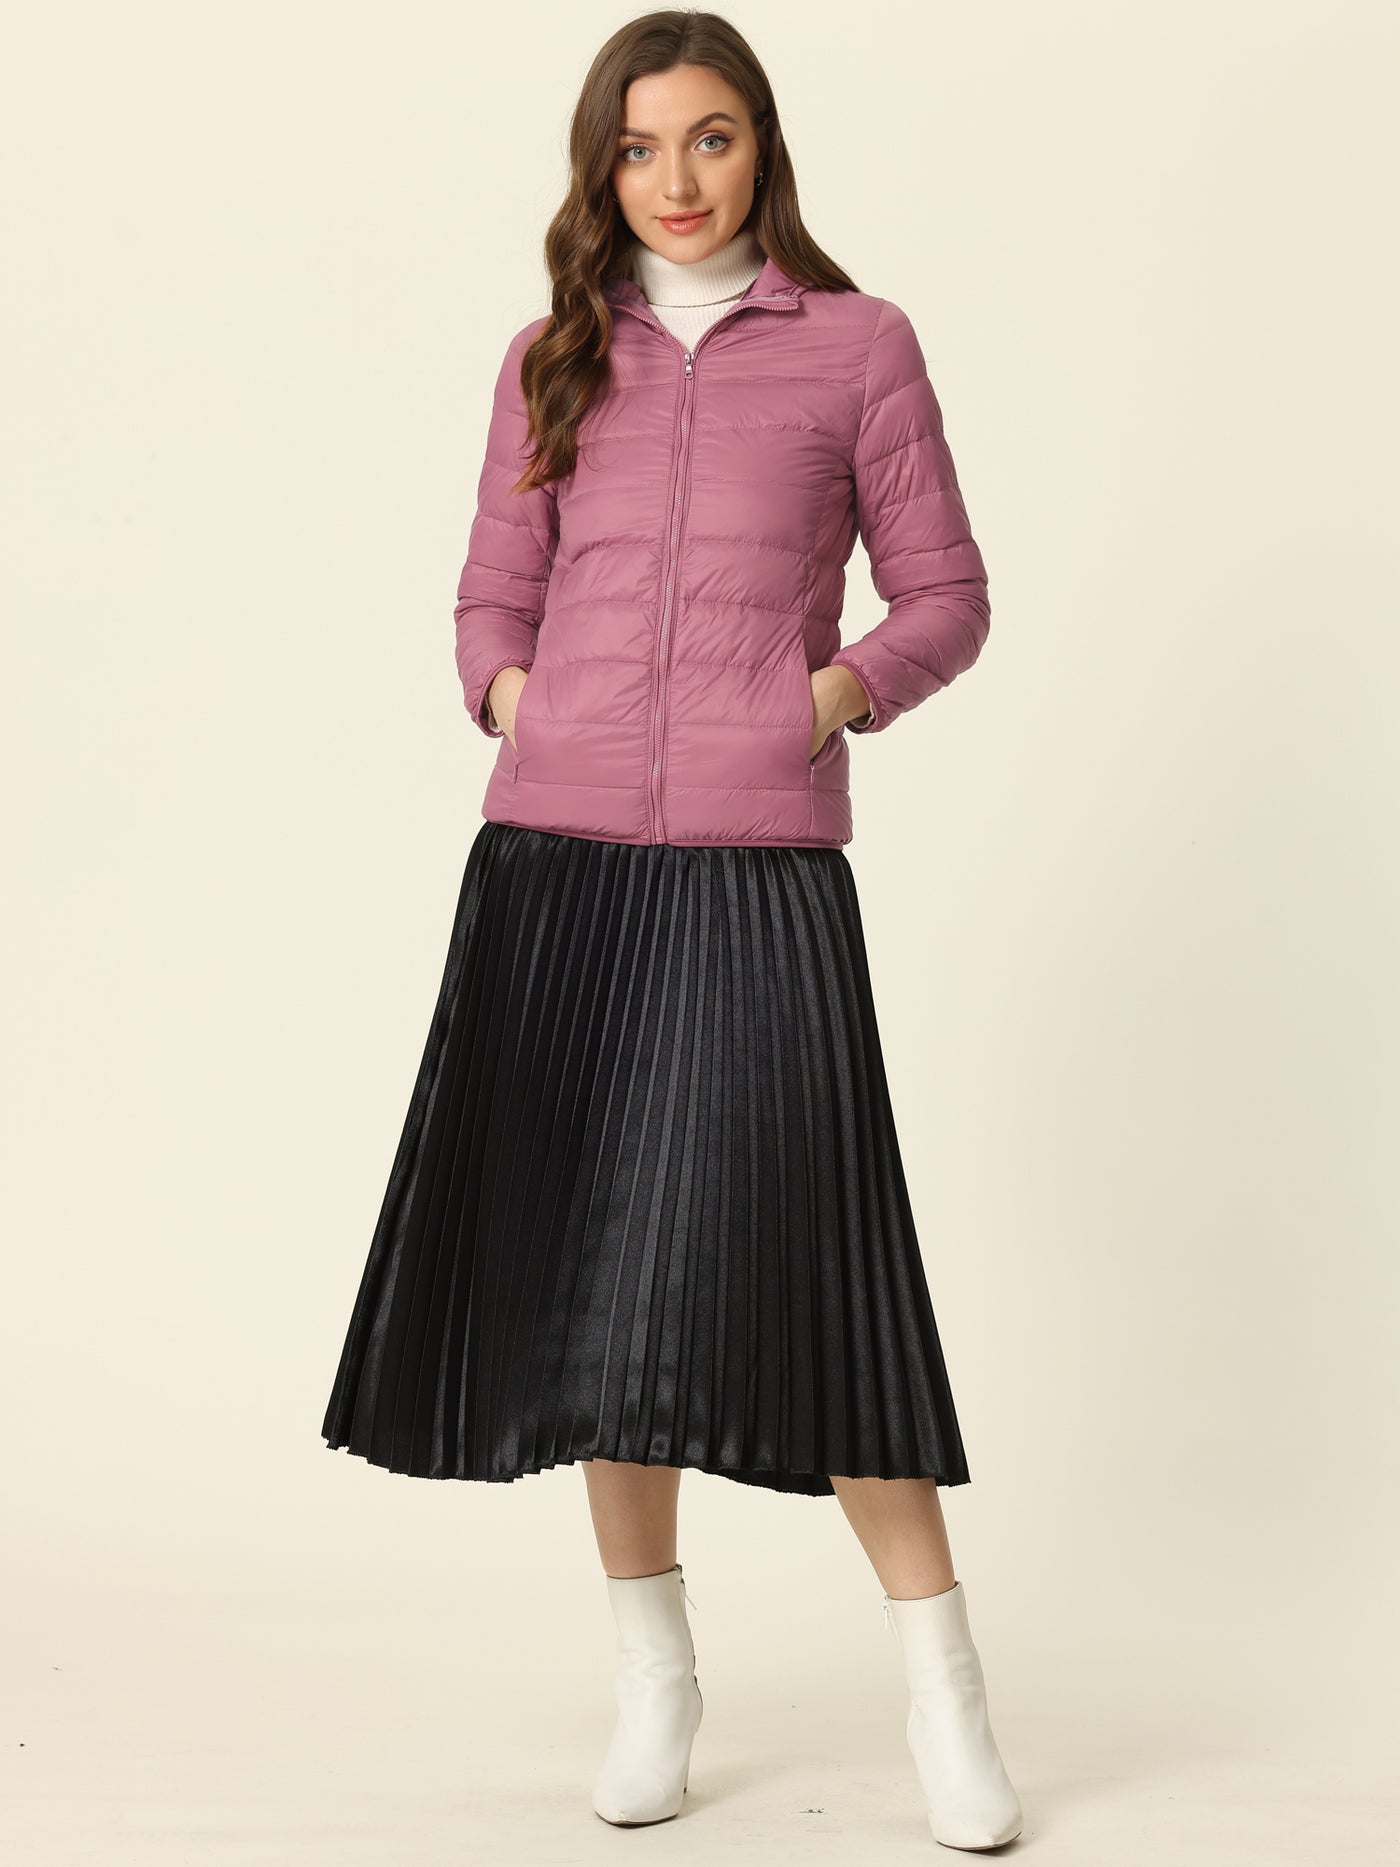 Allegra K Hooded Packable Long Sleeve Zip Up Down Winter Lightweight Jacket